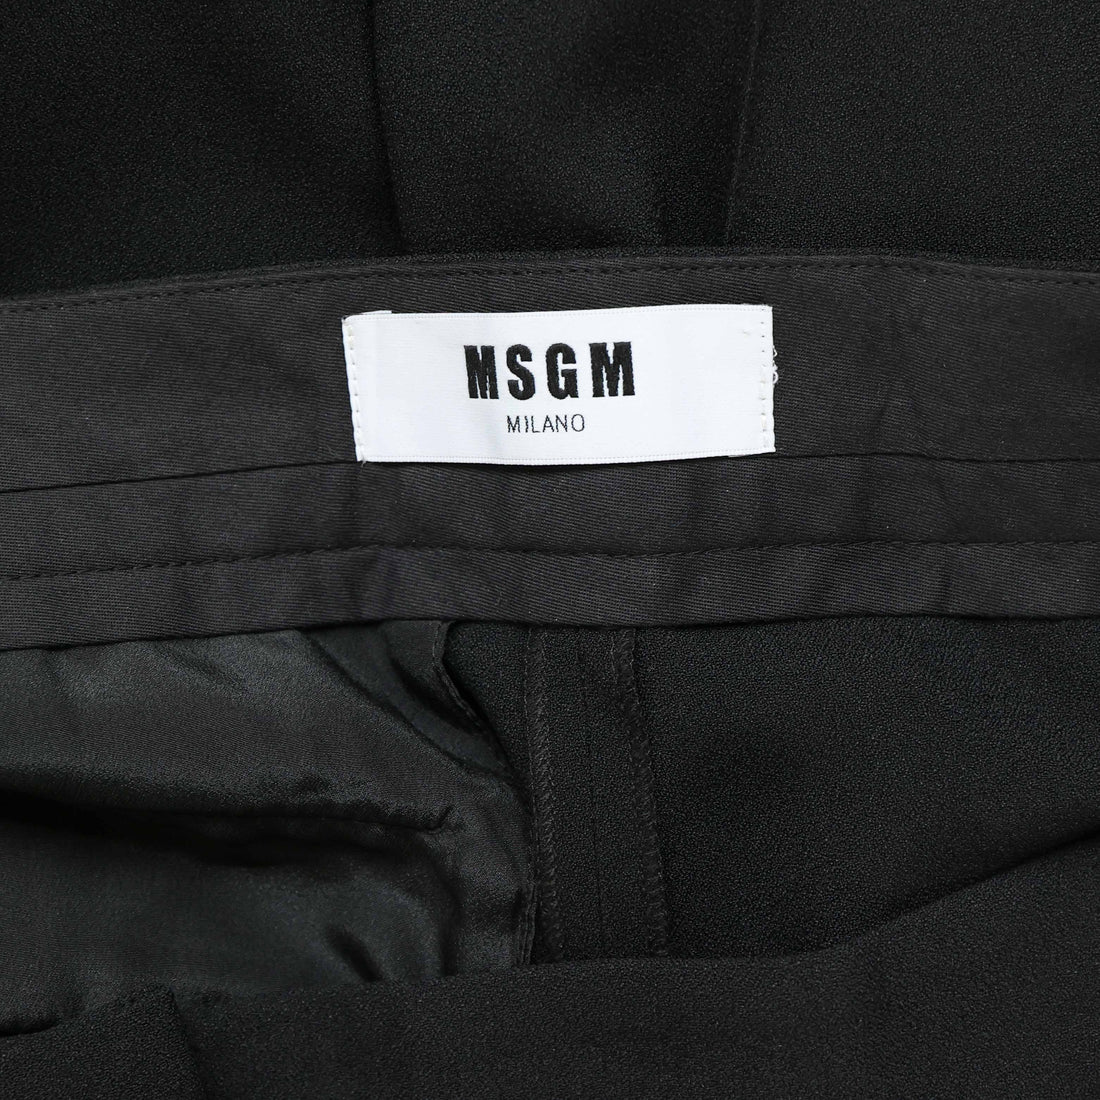 MSGM cloth pants with full pants